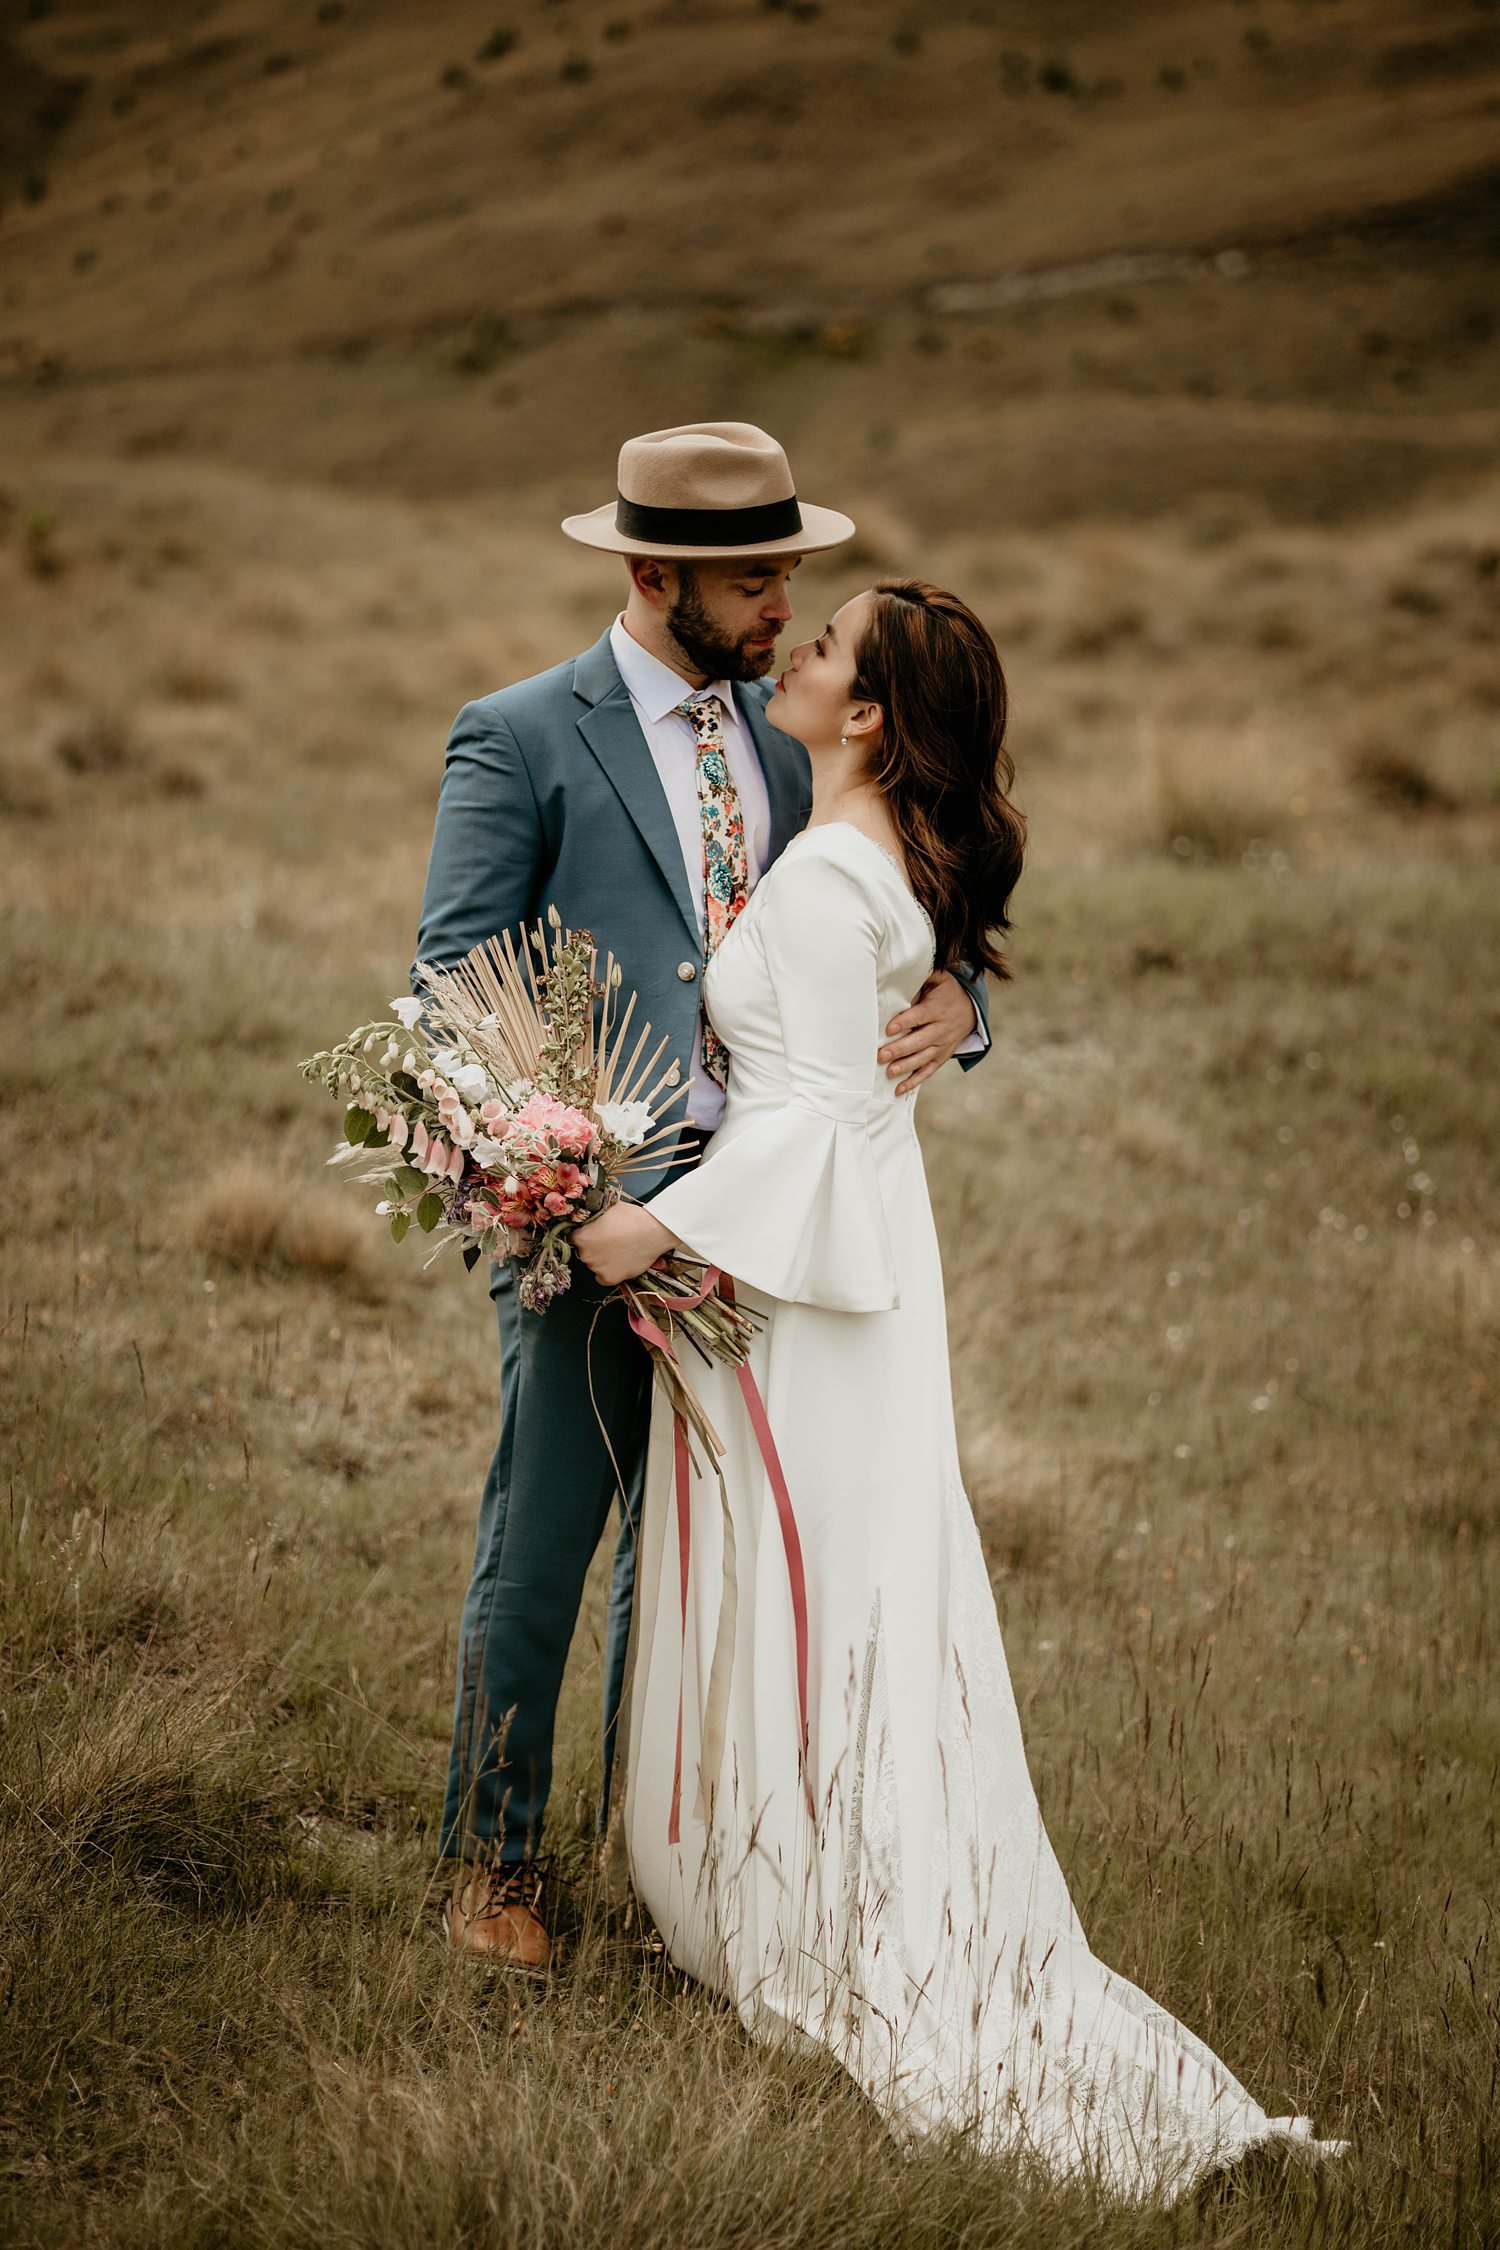 Ollie & Ritz |Panda Bay Films Wedding Photographer Queenstown New Zealand  Elopement Pre Wedding and Heli-Wedding Photography_-112.jpg